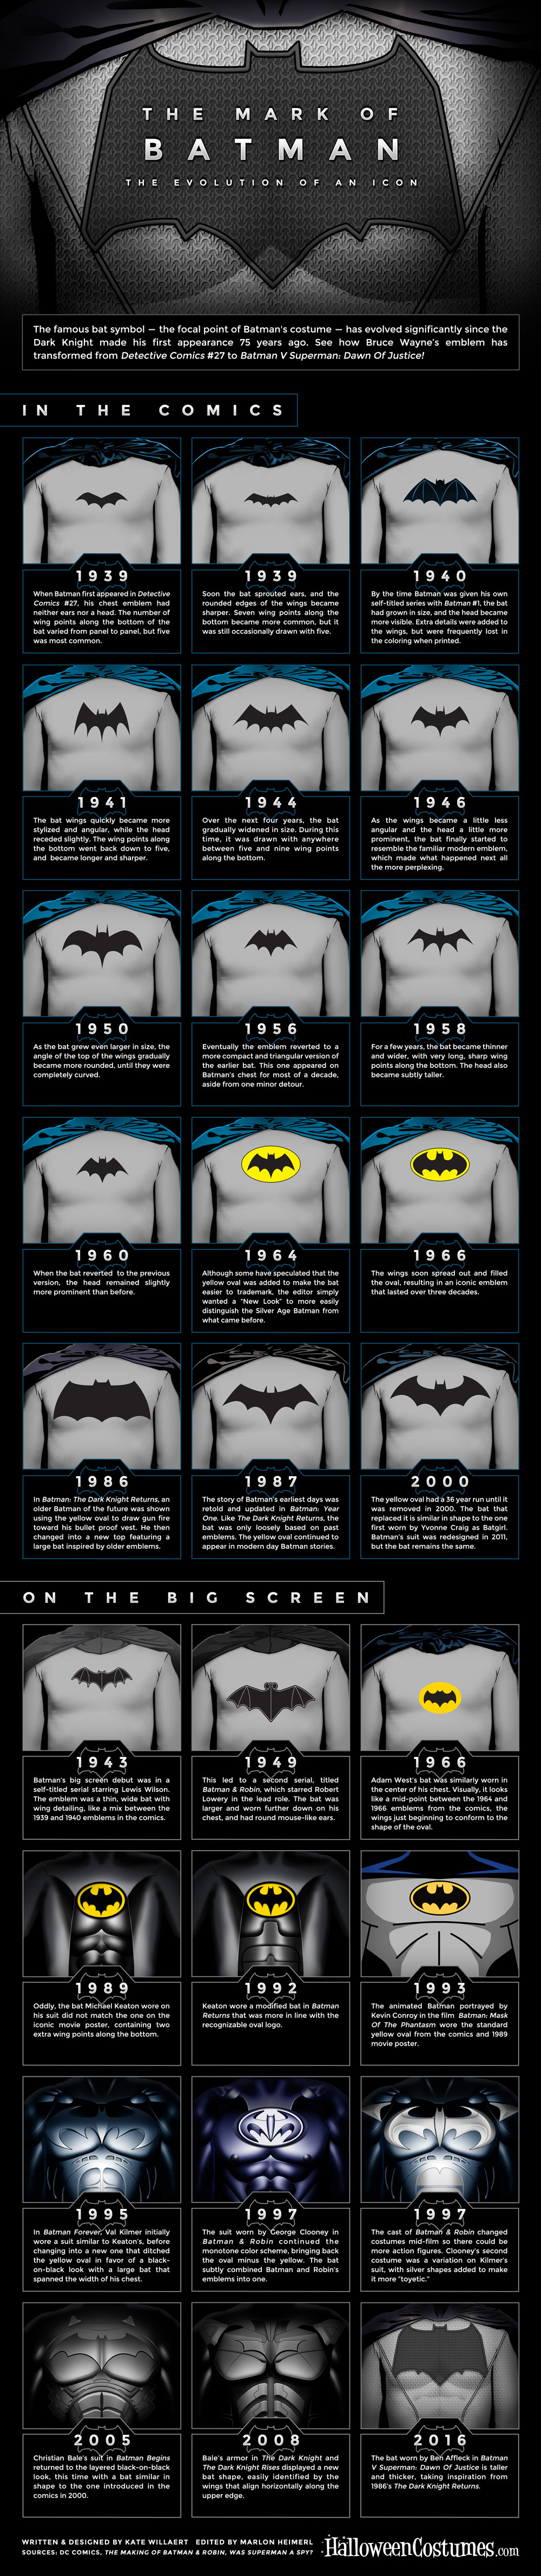 75 Years of Batman - Evolution of Batman Logo 